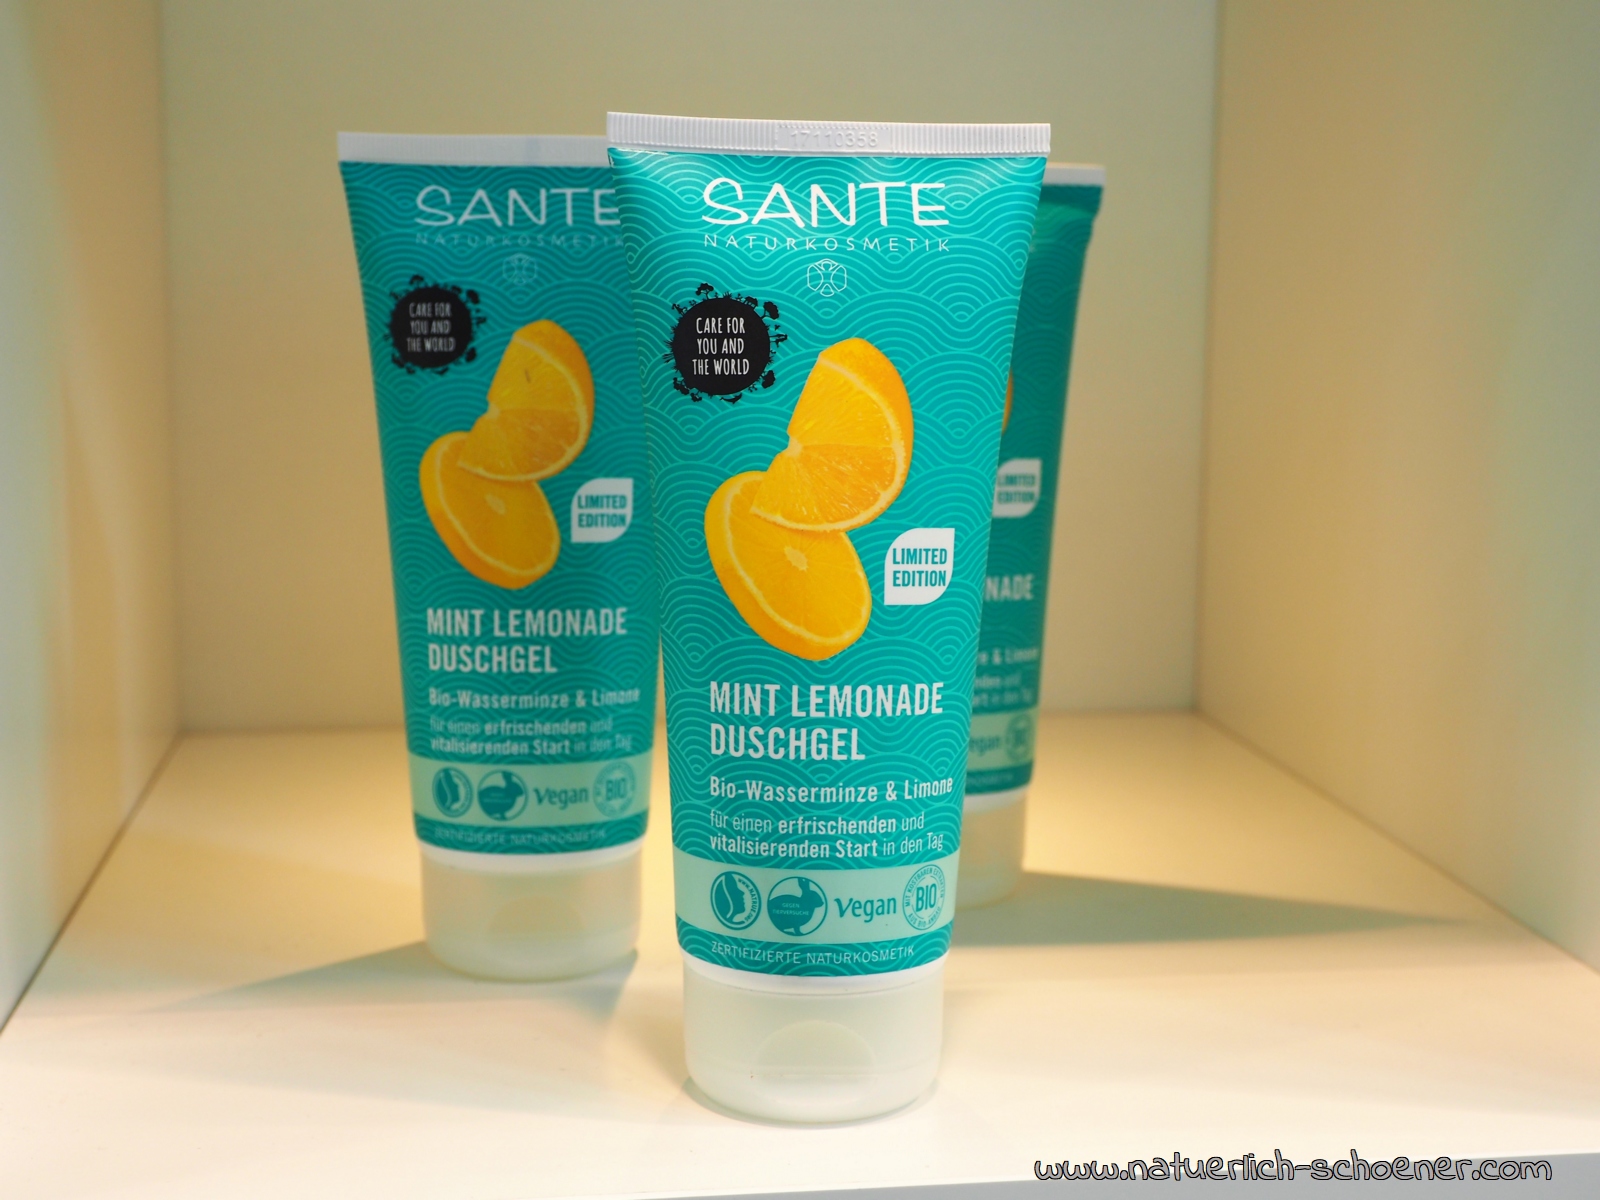 Sante Naturkosmetik - Limited Edition Mint Lemonade Duschgel